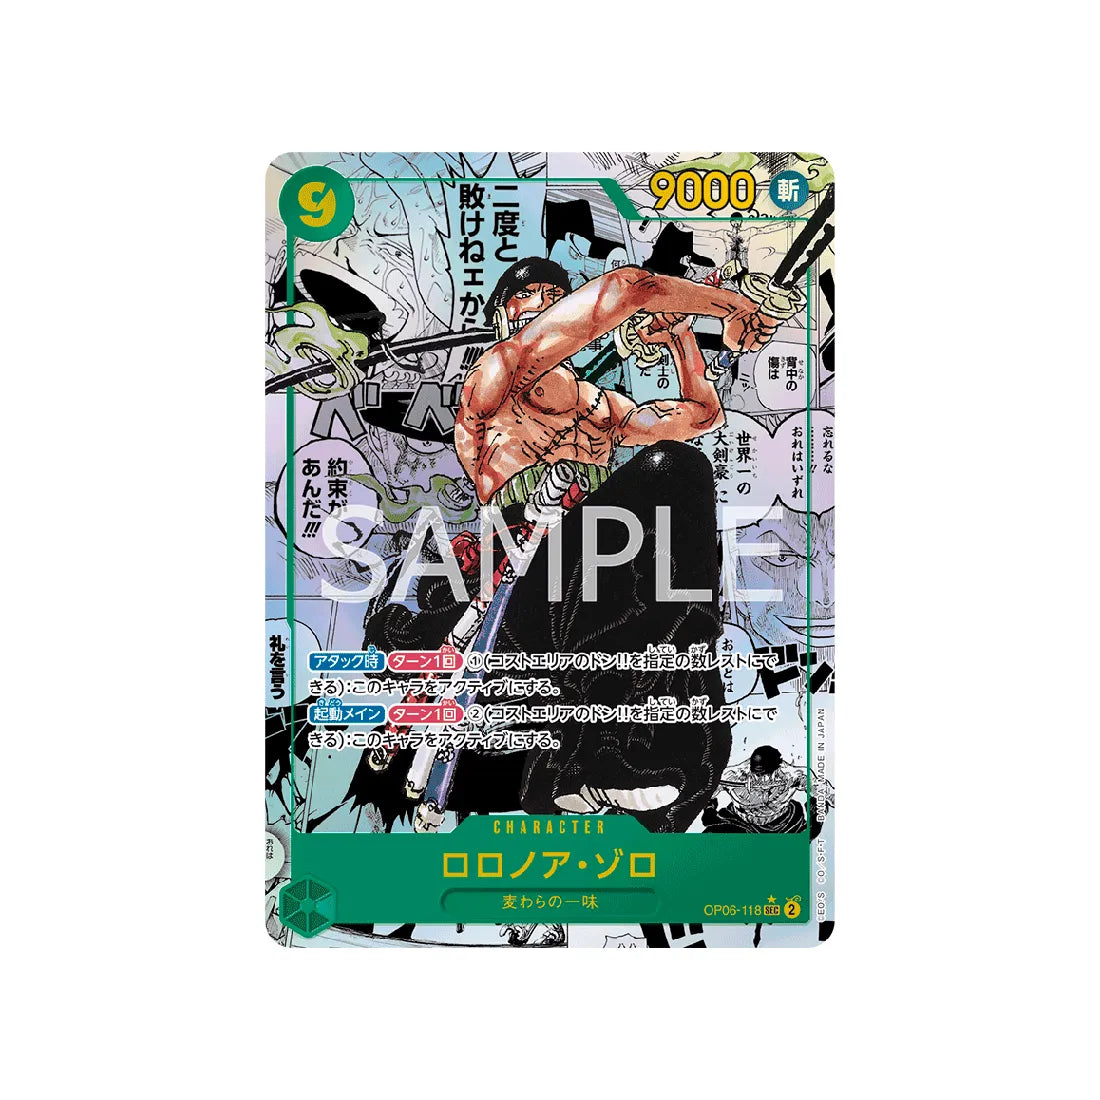 Carte One Piece  Wings Of Captain OP06-118 : Roronoa Zoro (Parallèle Spéciale)